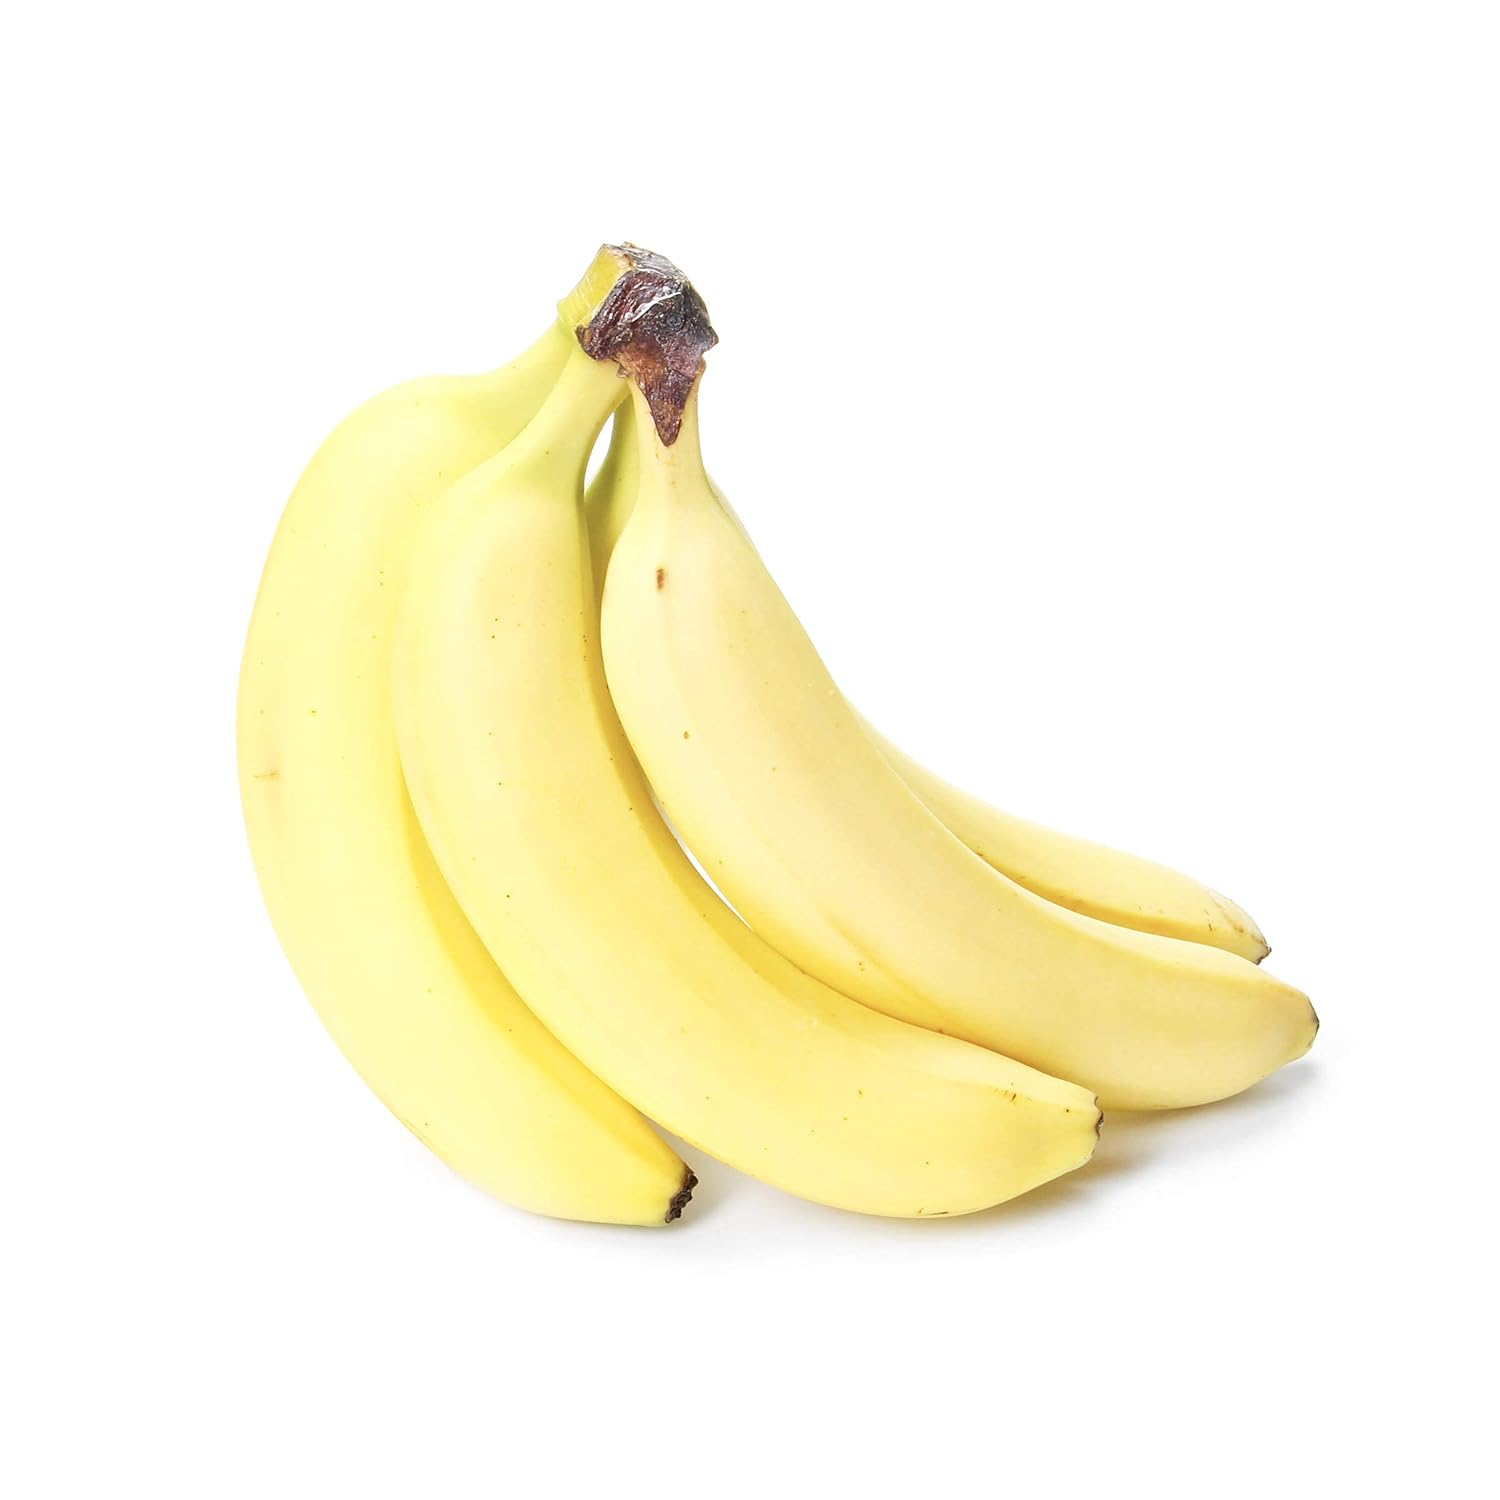 organic banana review